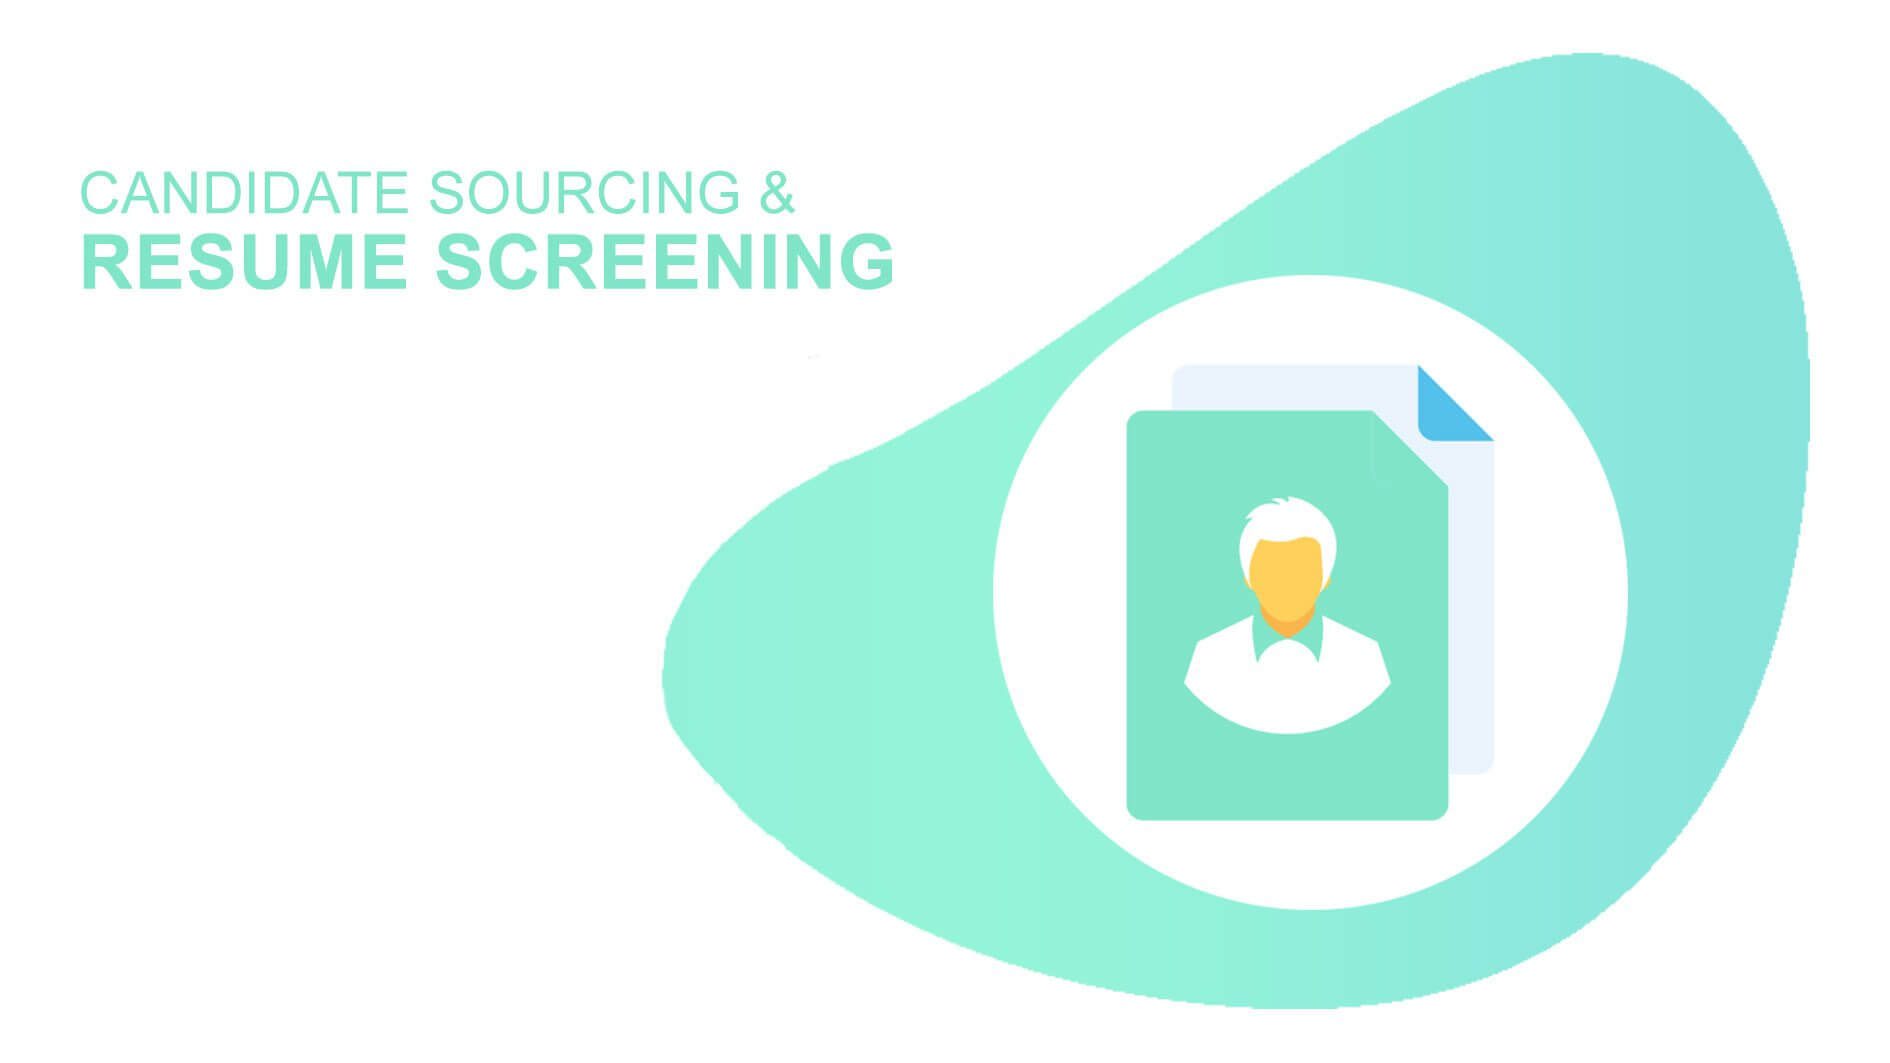 Resume screening